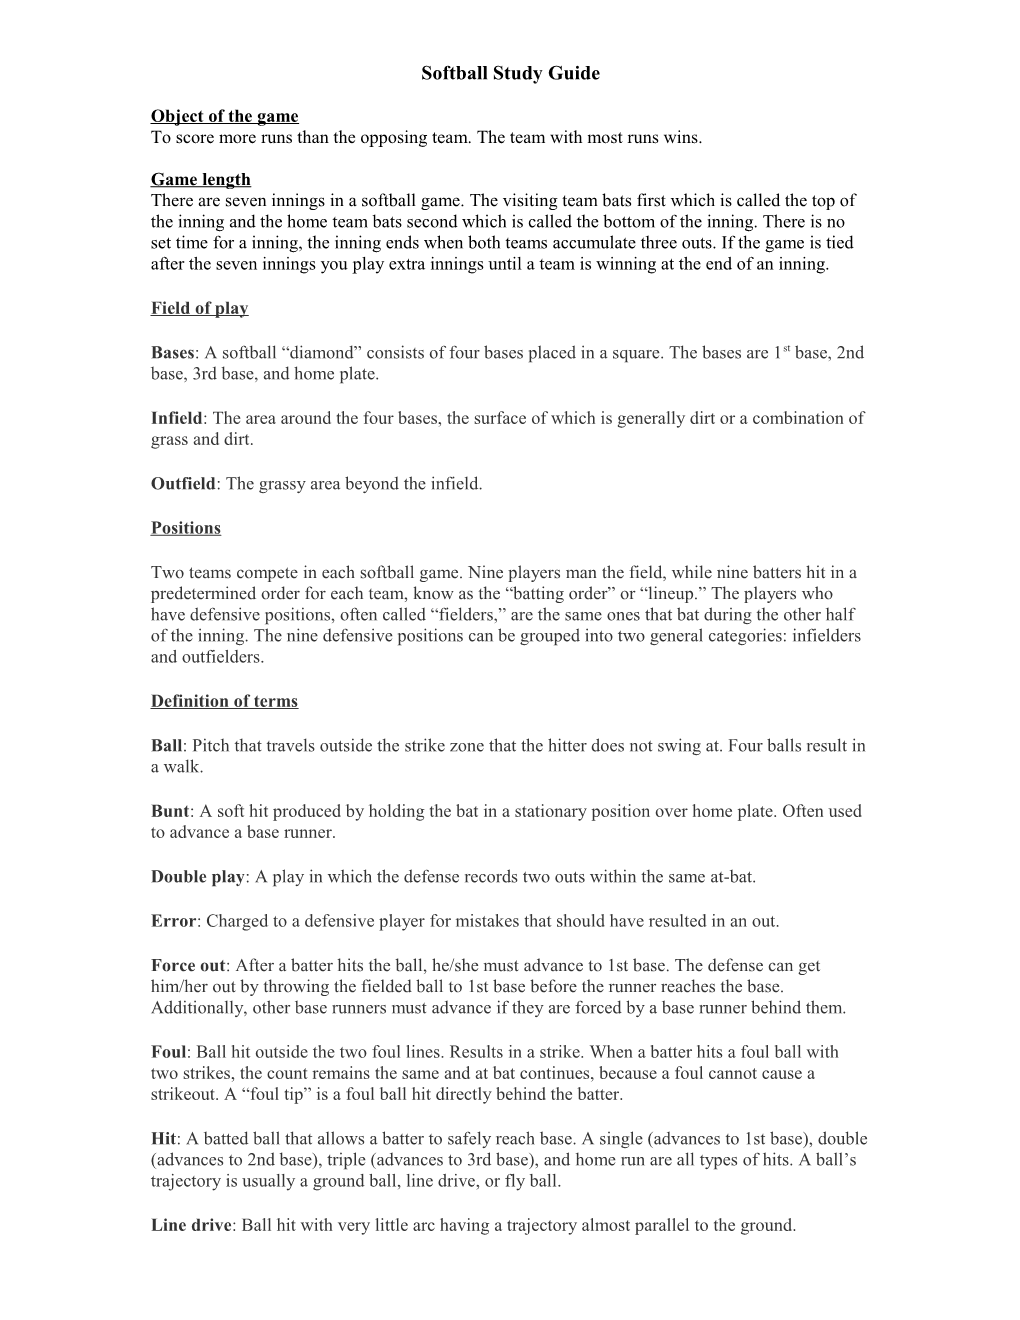 Softball Study Guide s1